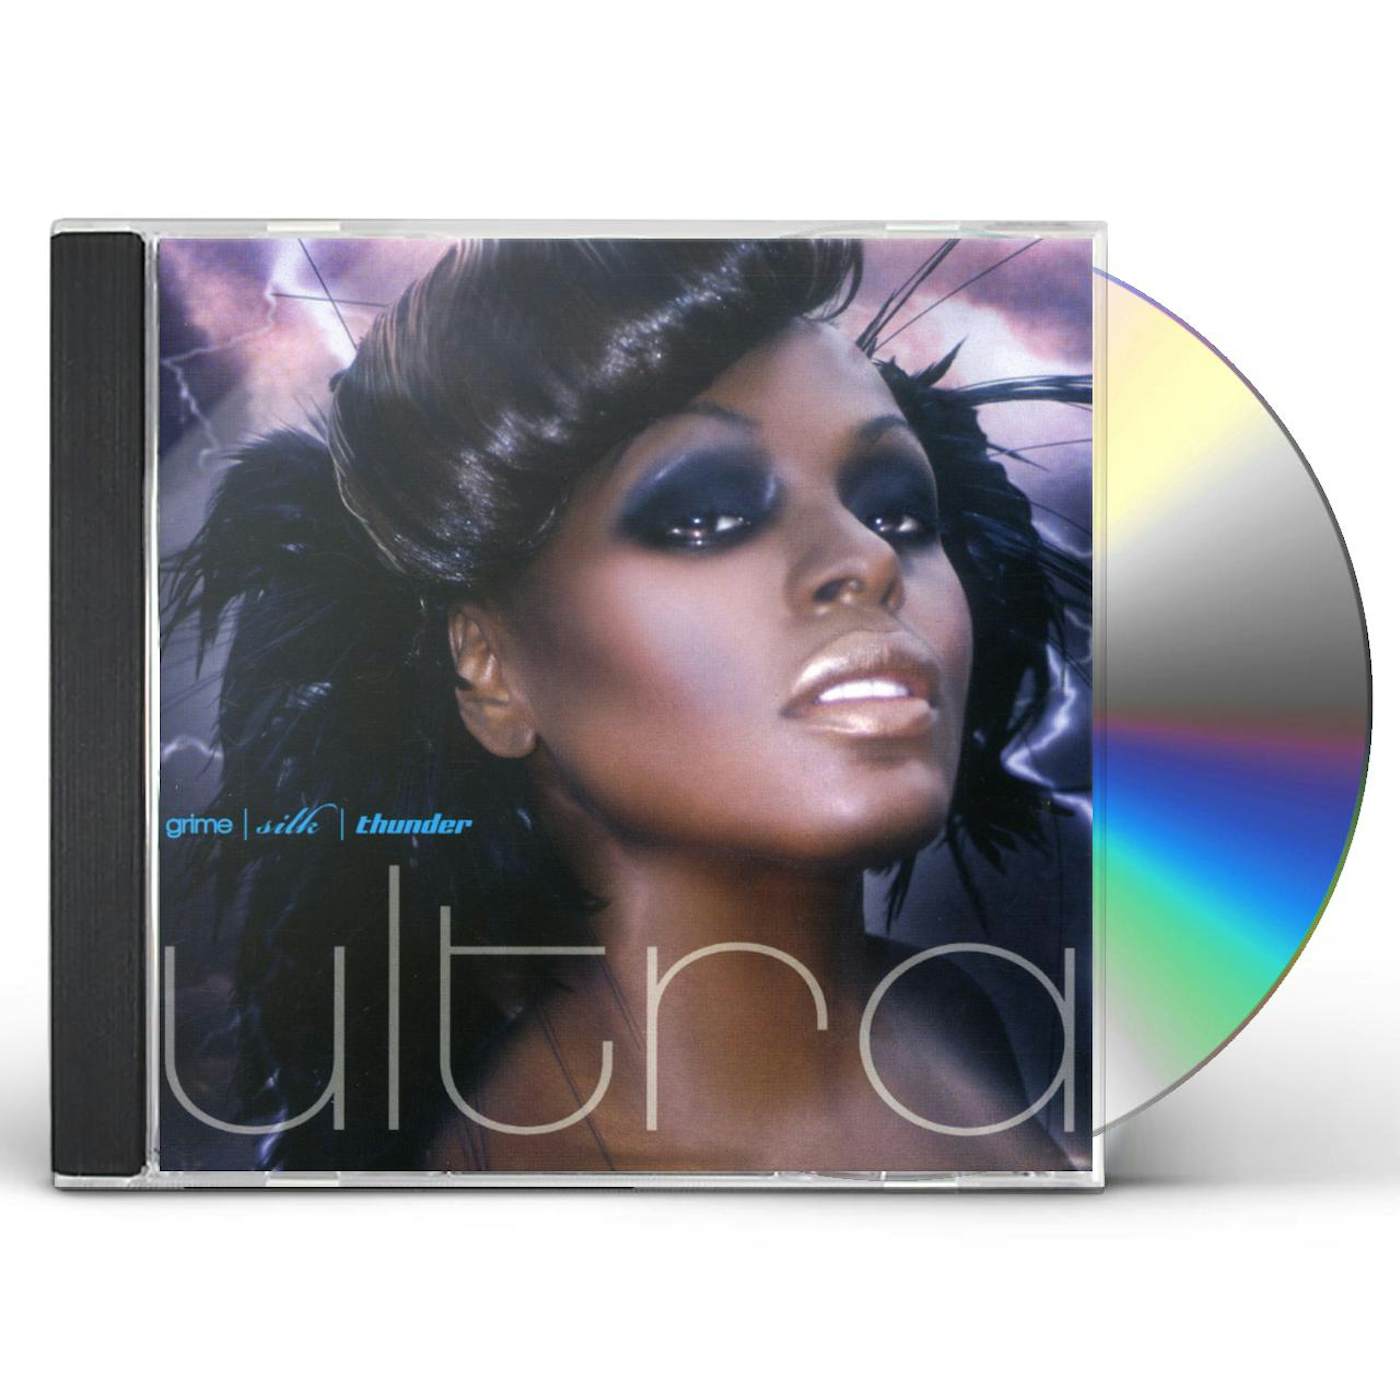 Ultra Naté GRIME SILK THUNDER CD